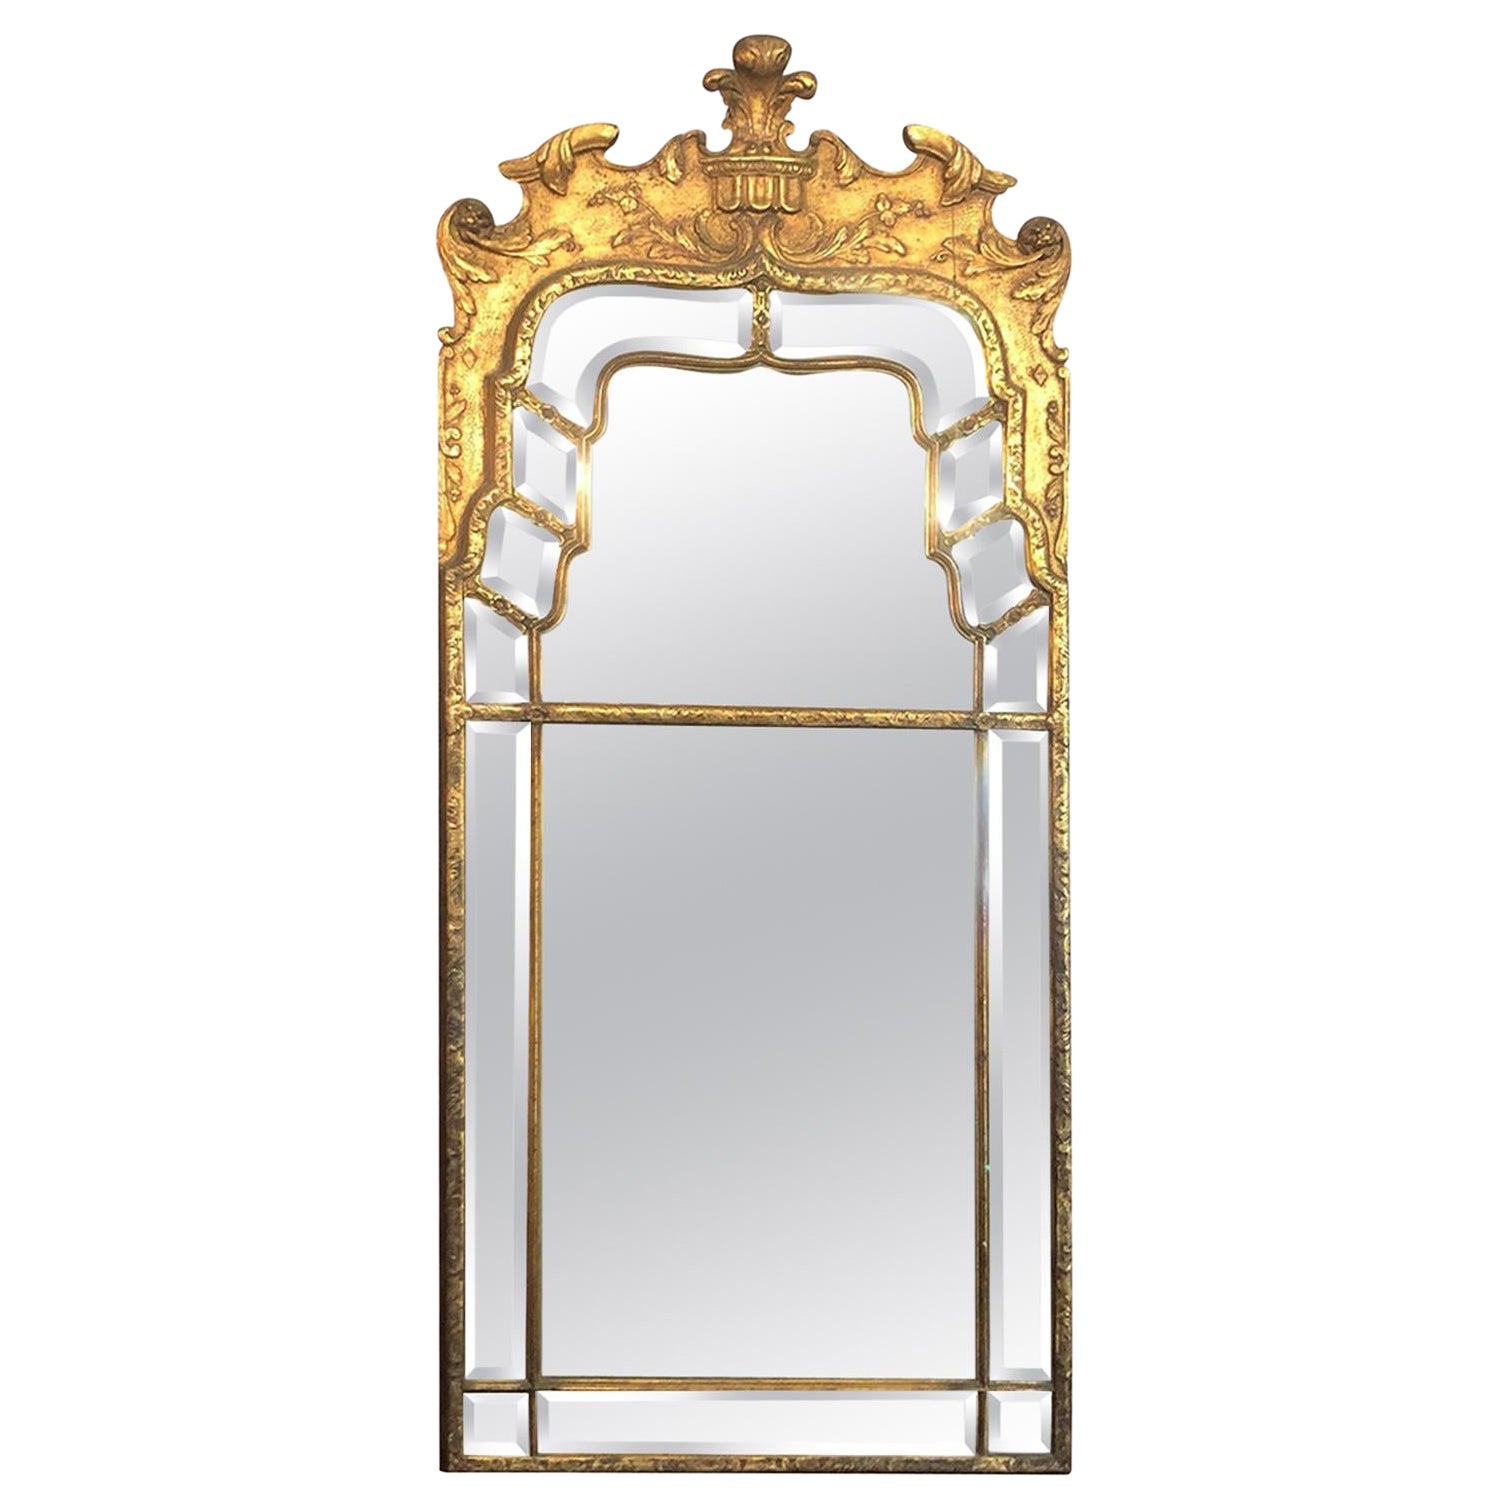 Miroir chinois ancien de style chinoiseries en or avec fines perles